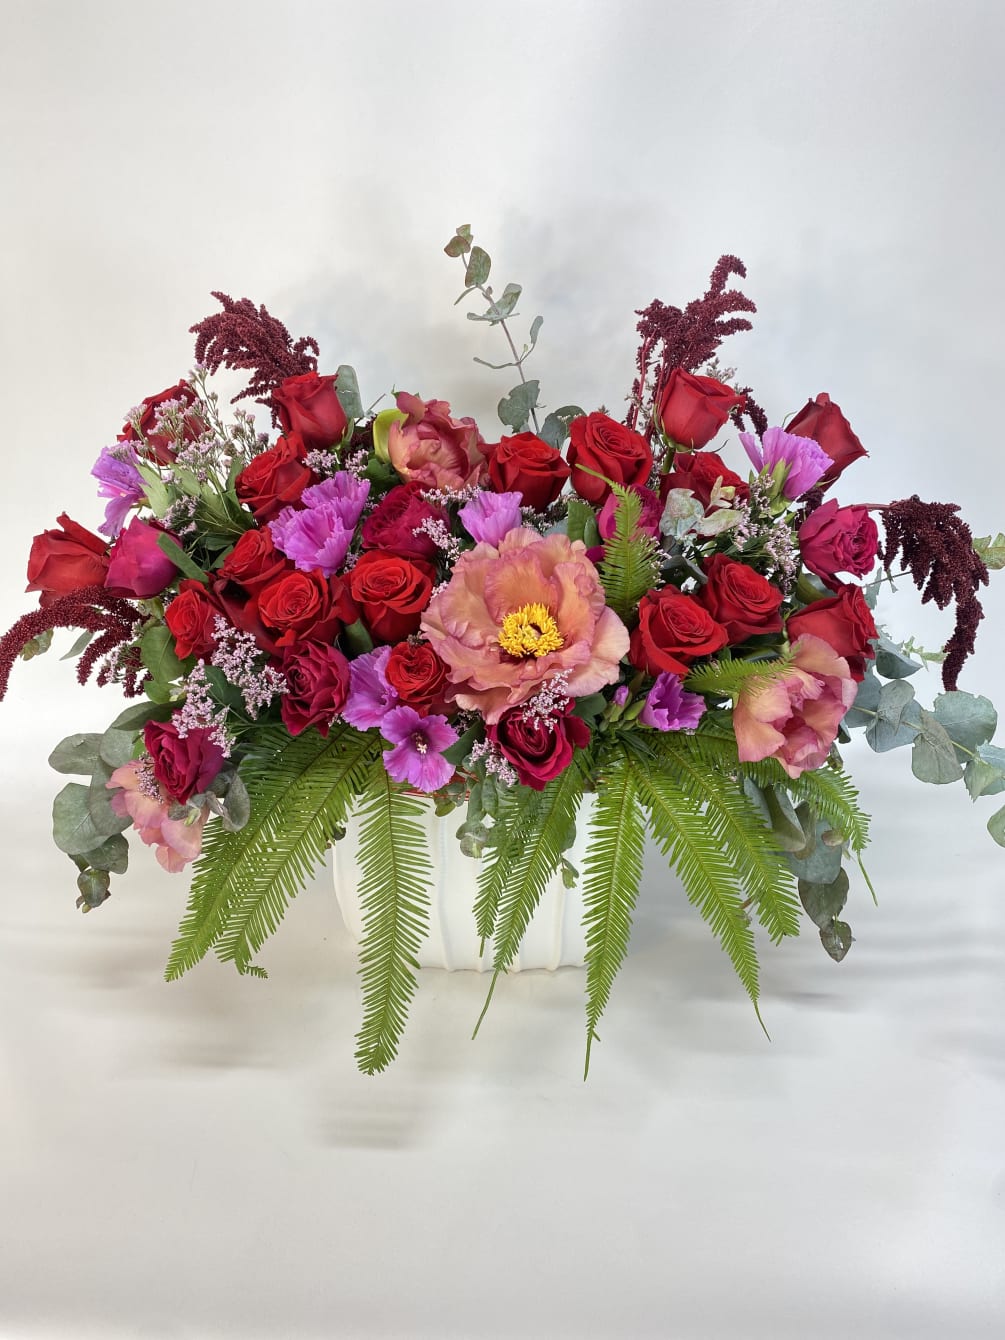 Romantic, large and elegant floral arrangement, designer choice.